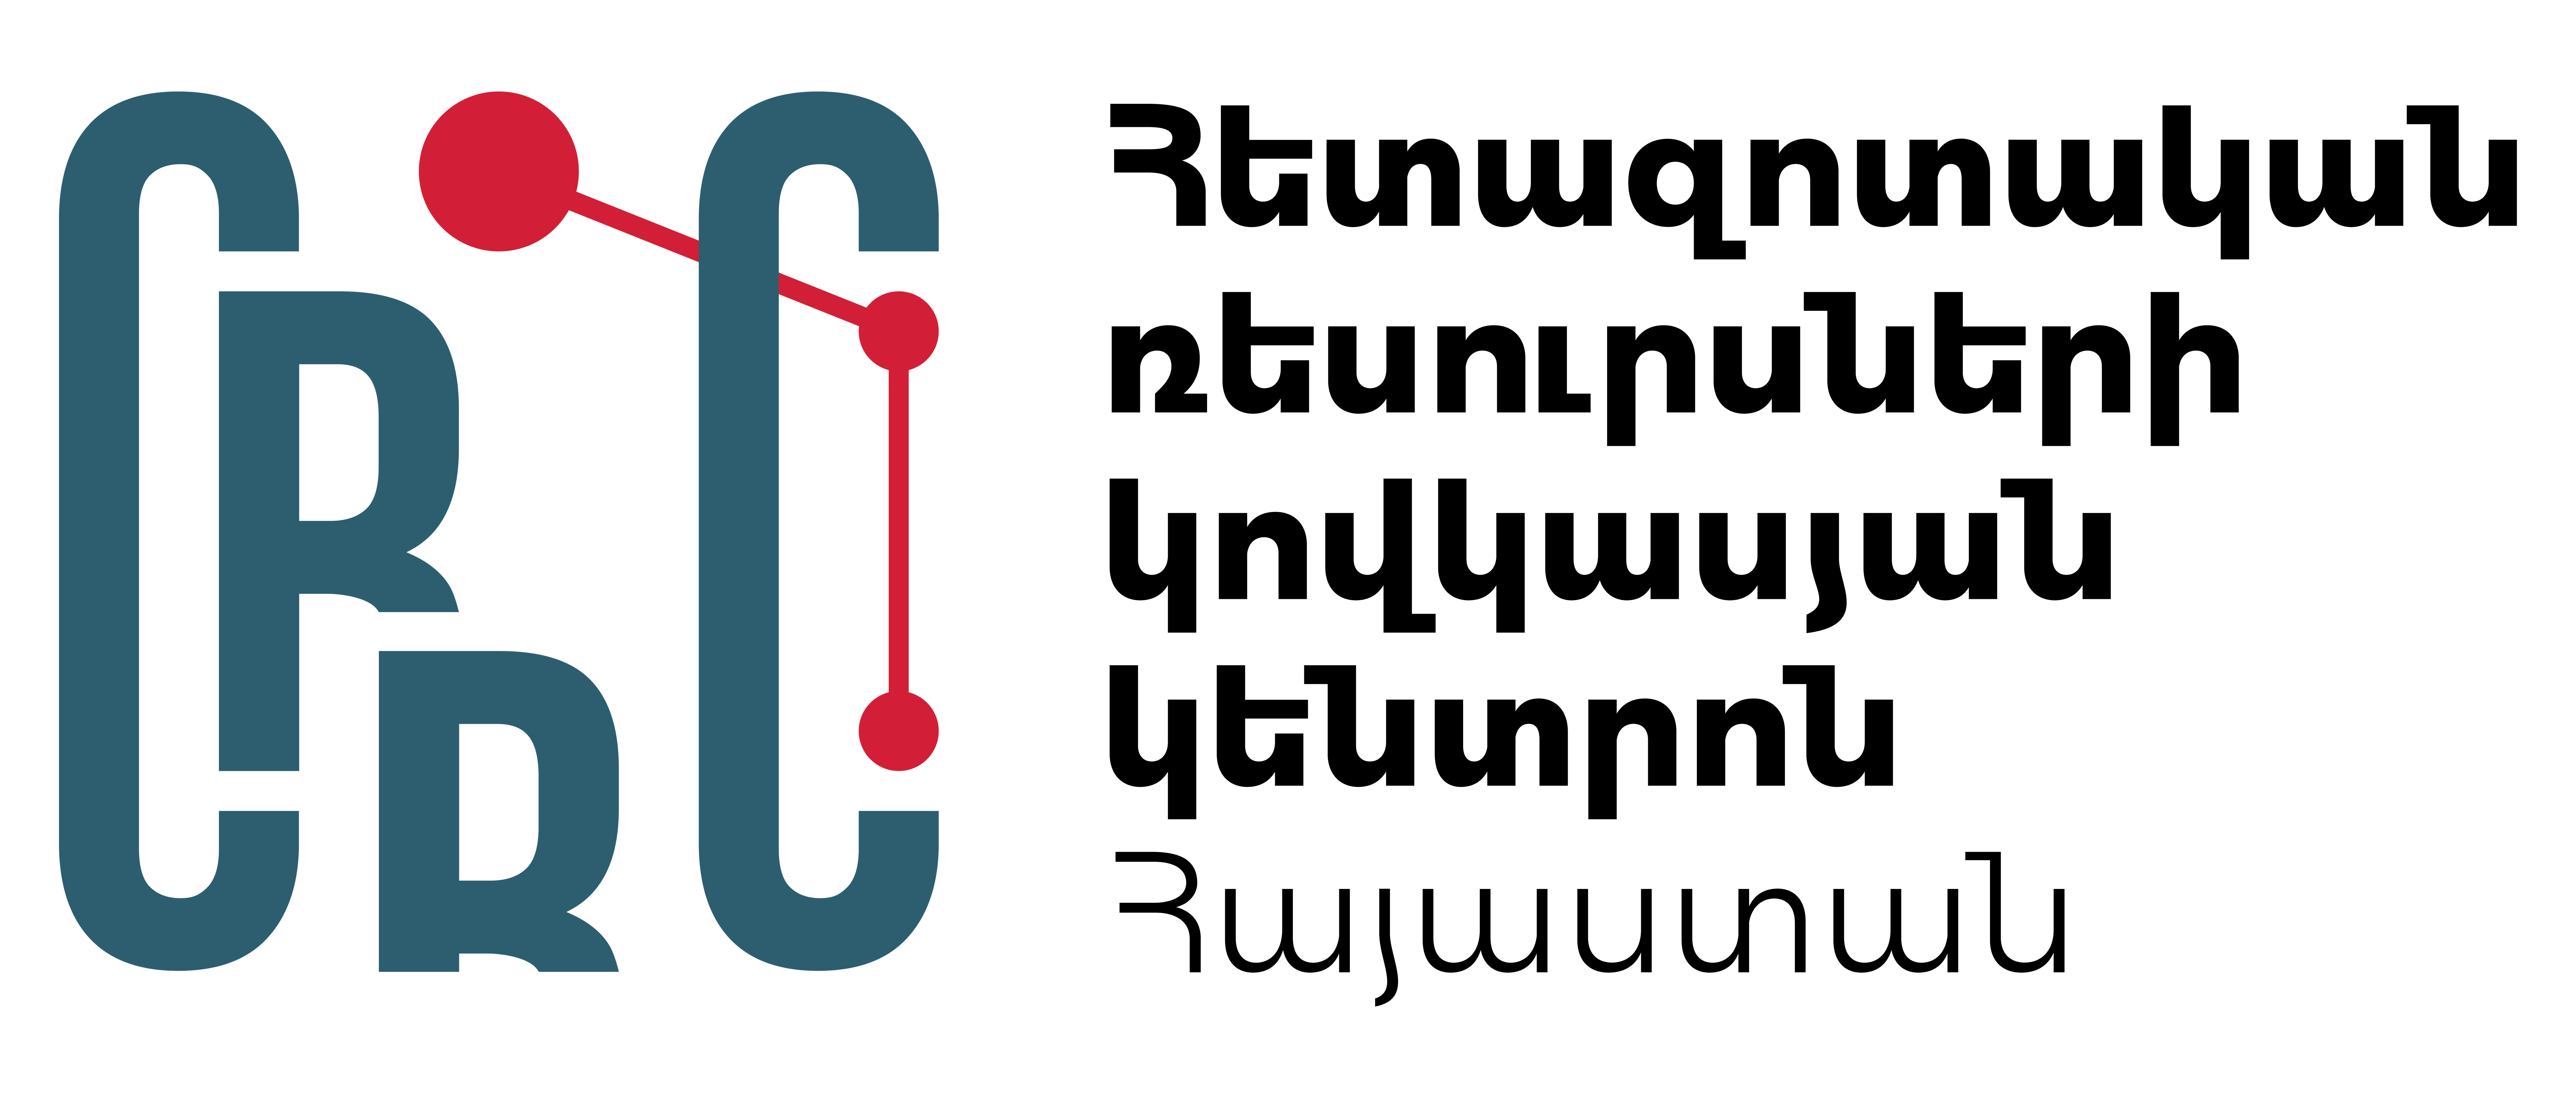 Logo CRRC